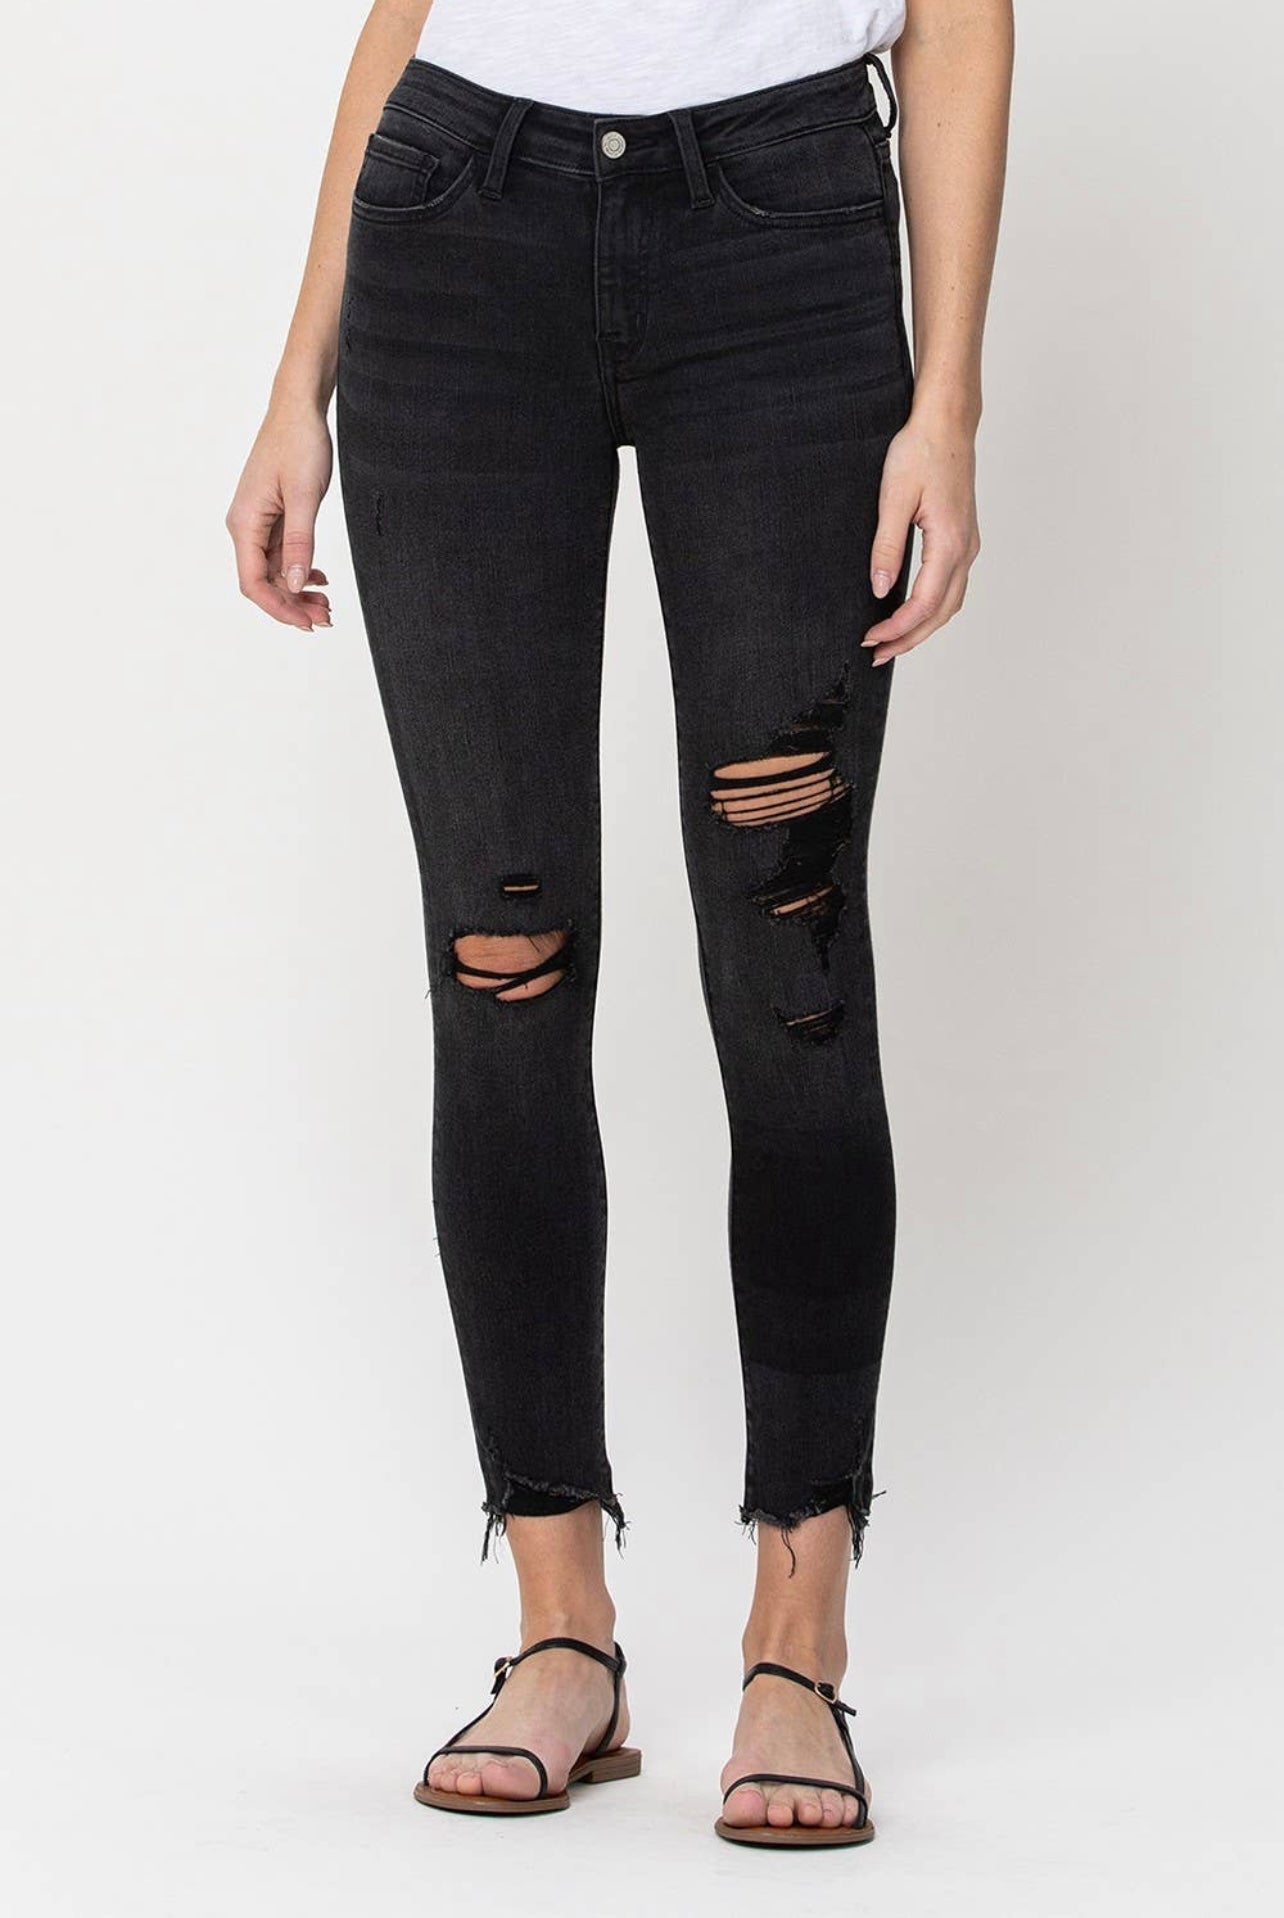 Distressed Black Jeans